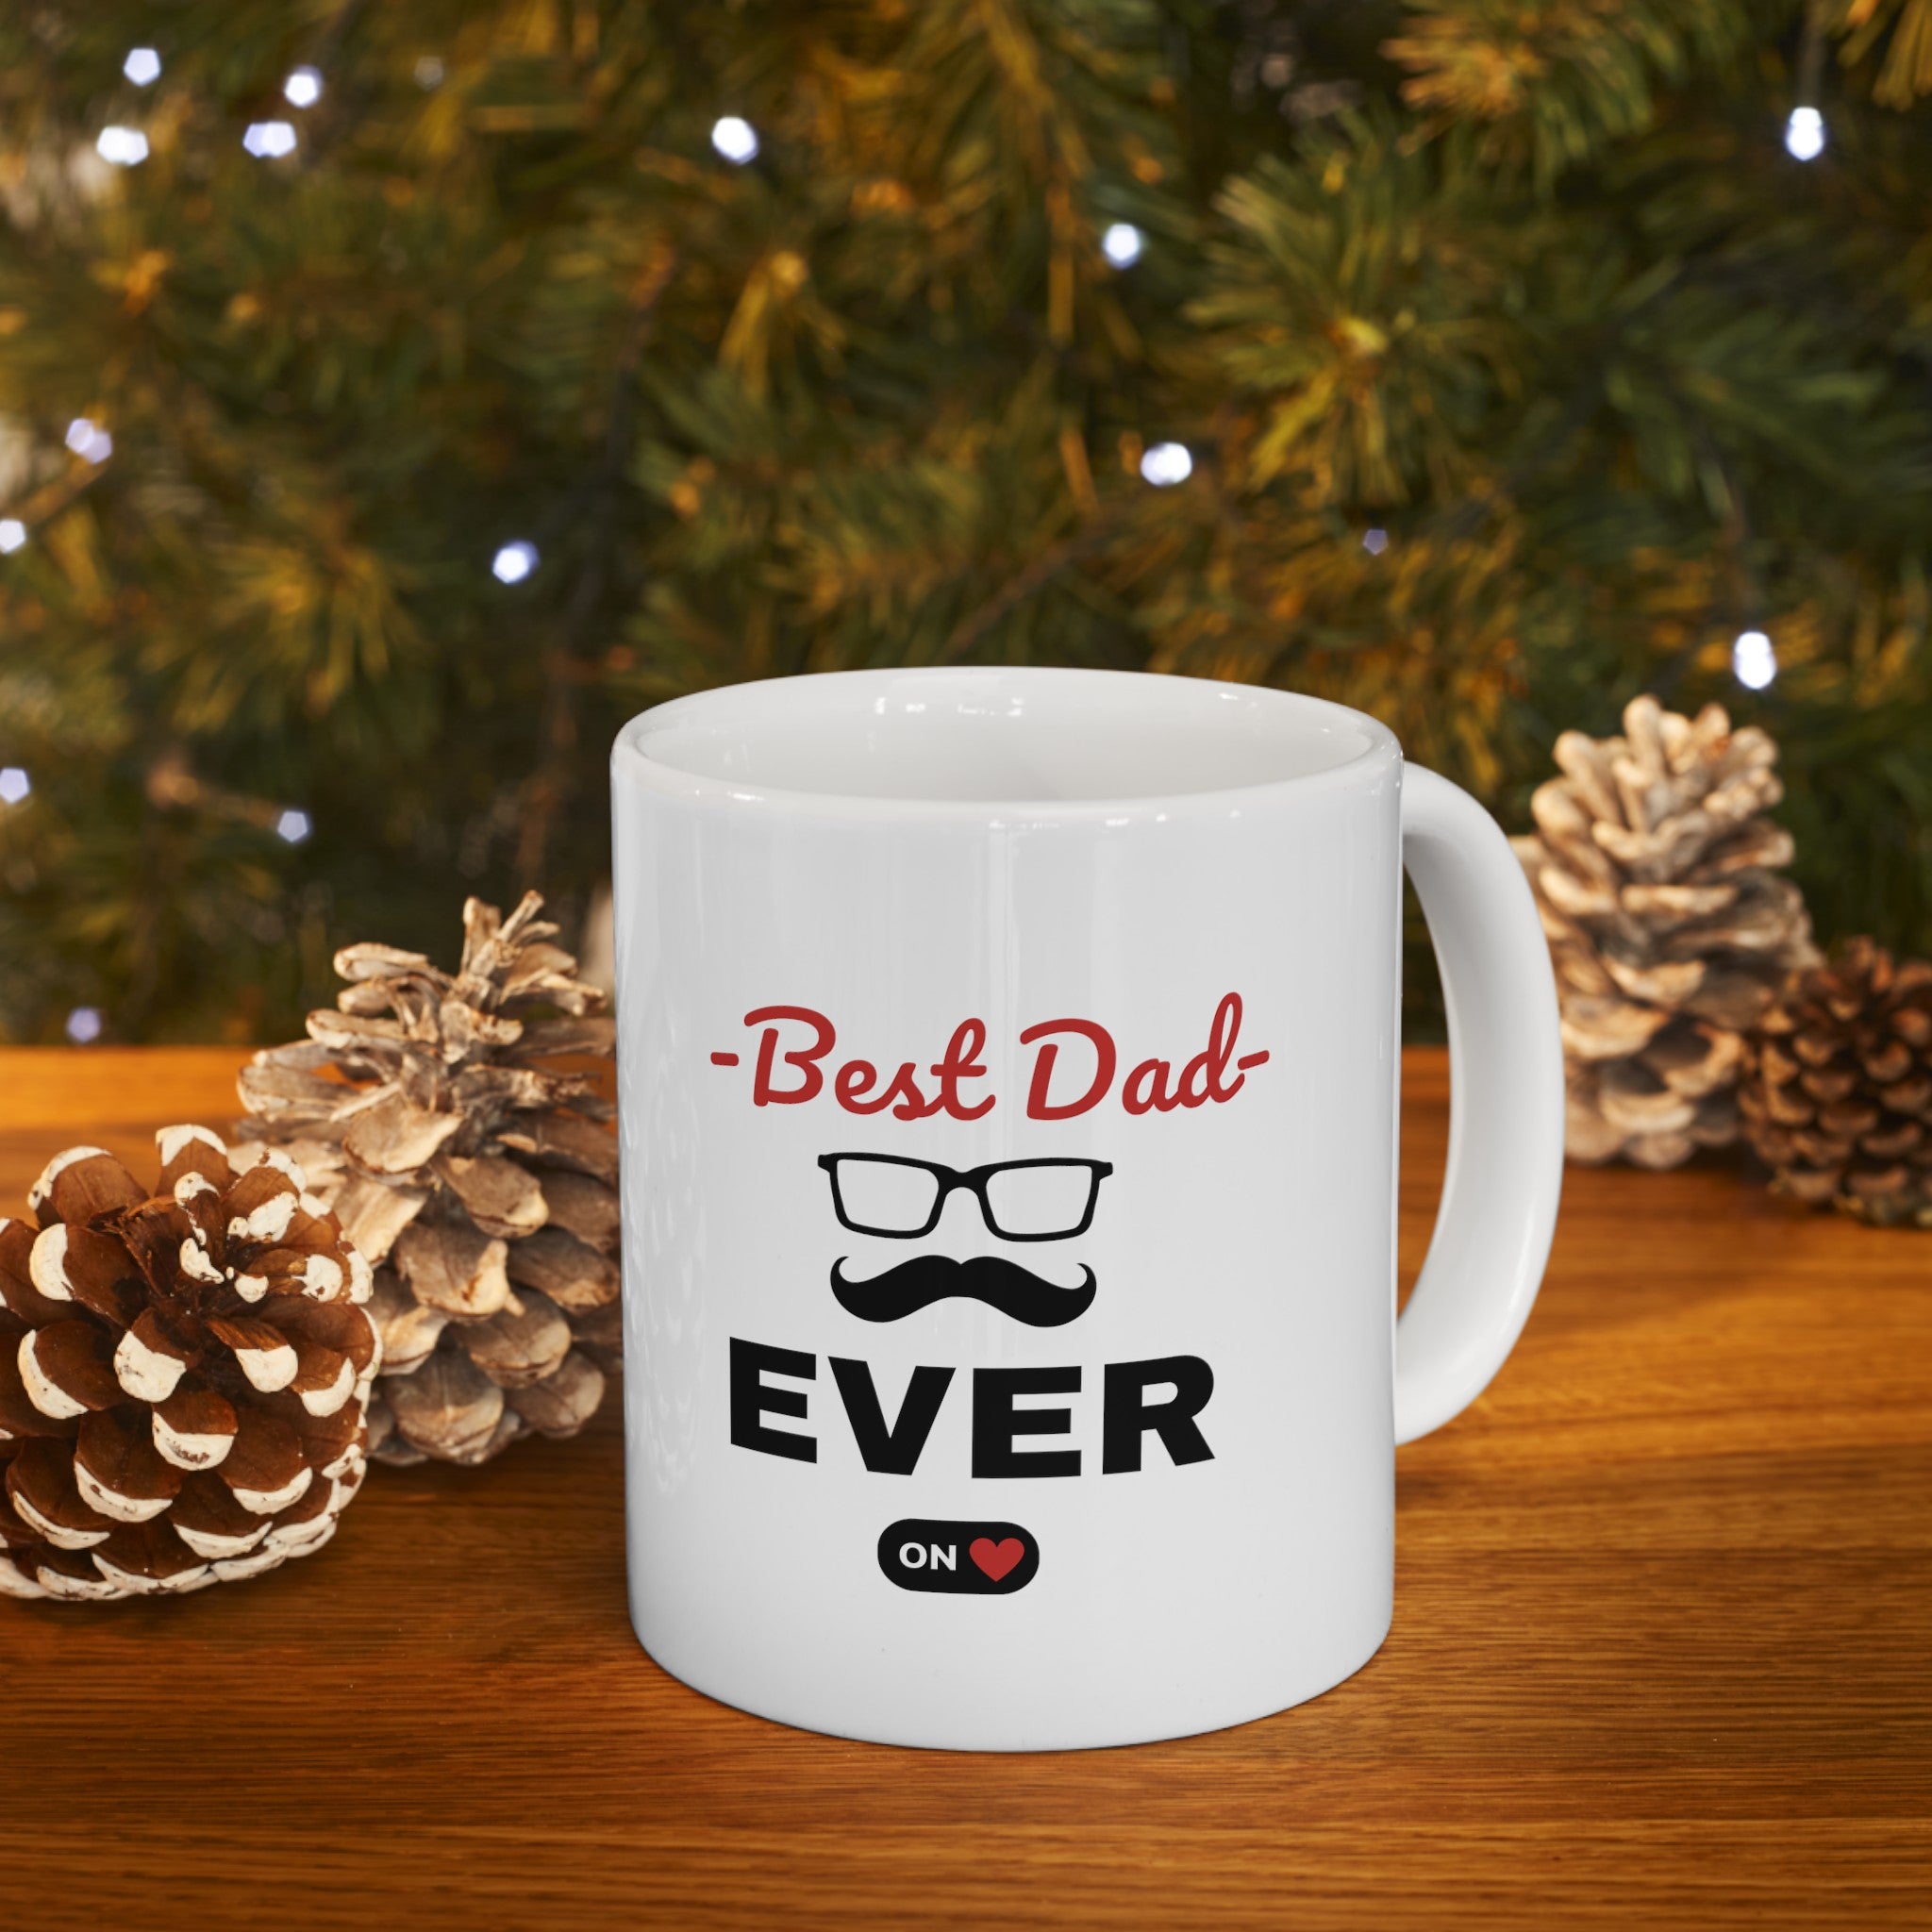 Best Dad Ever Ceramic Mug, 11oz 15oz Valentine's Day Gift, Kitchen Decor, Coffee Lover, Father's Day Mug